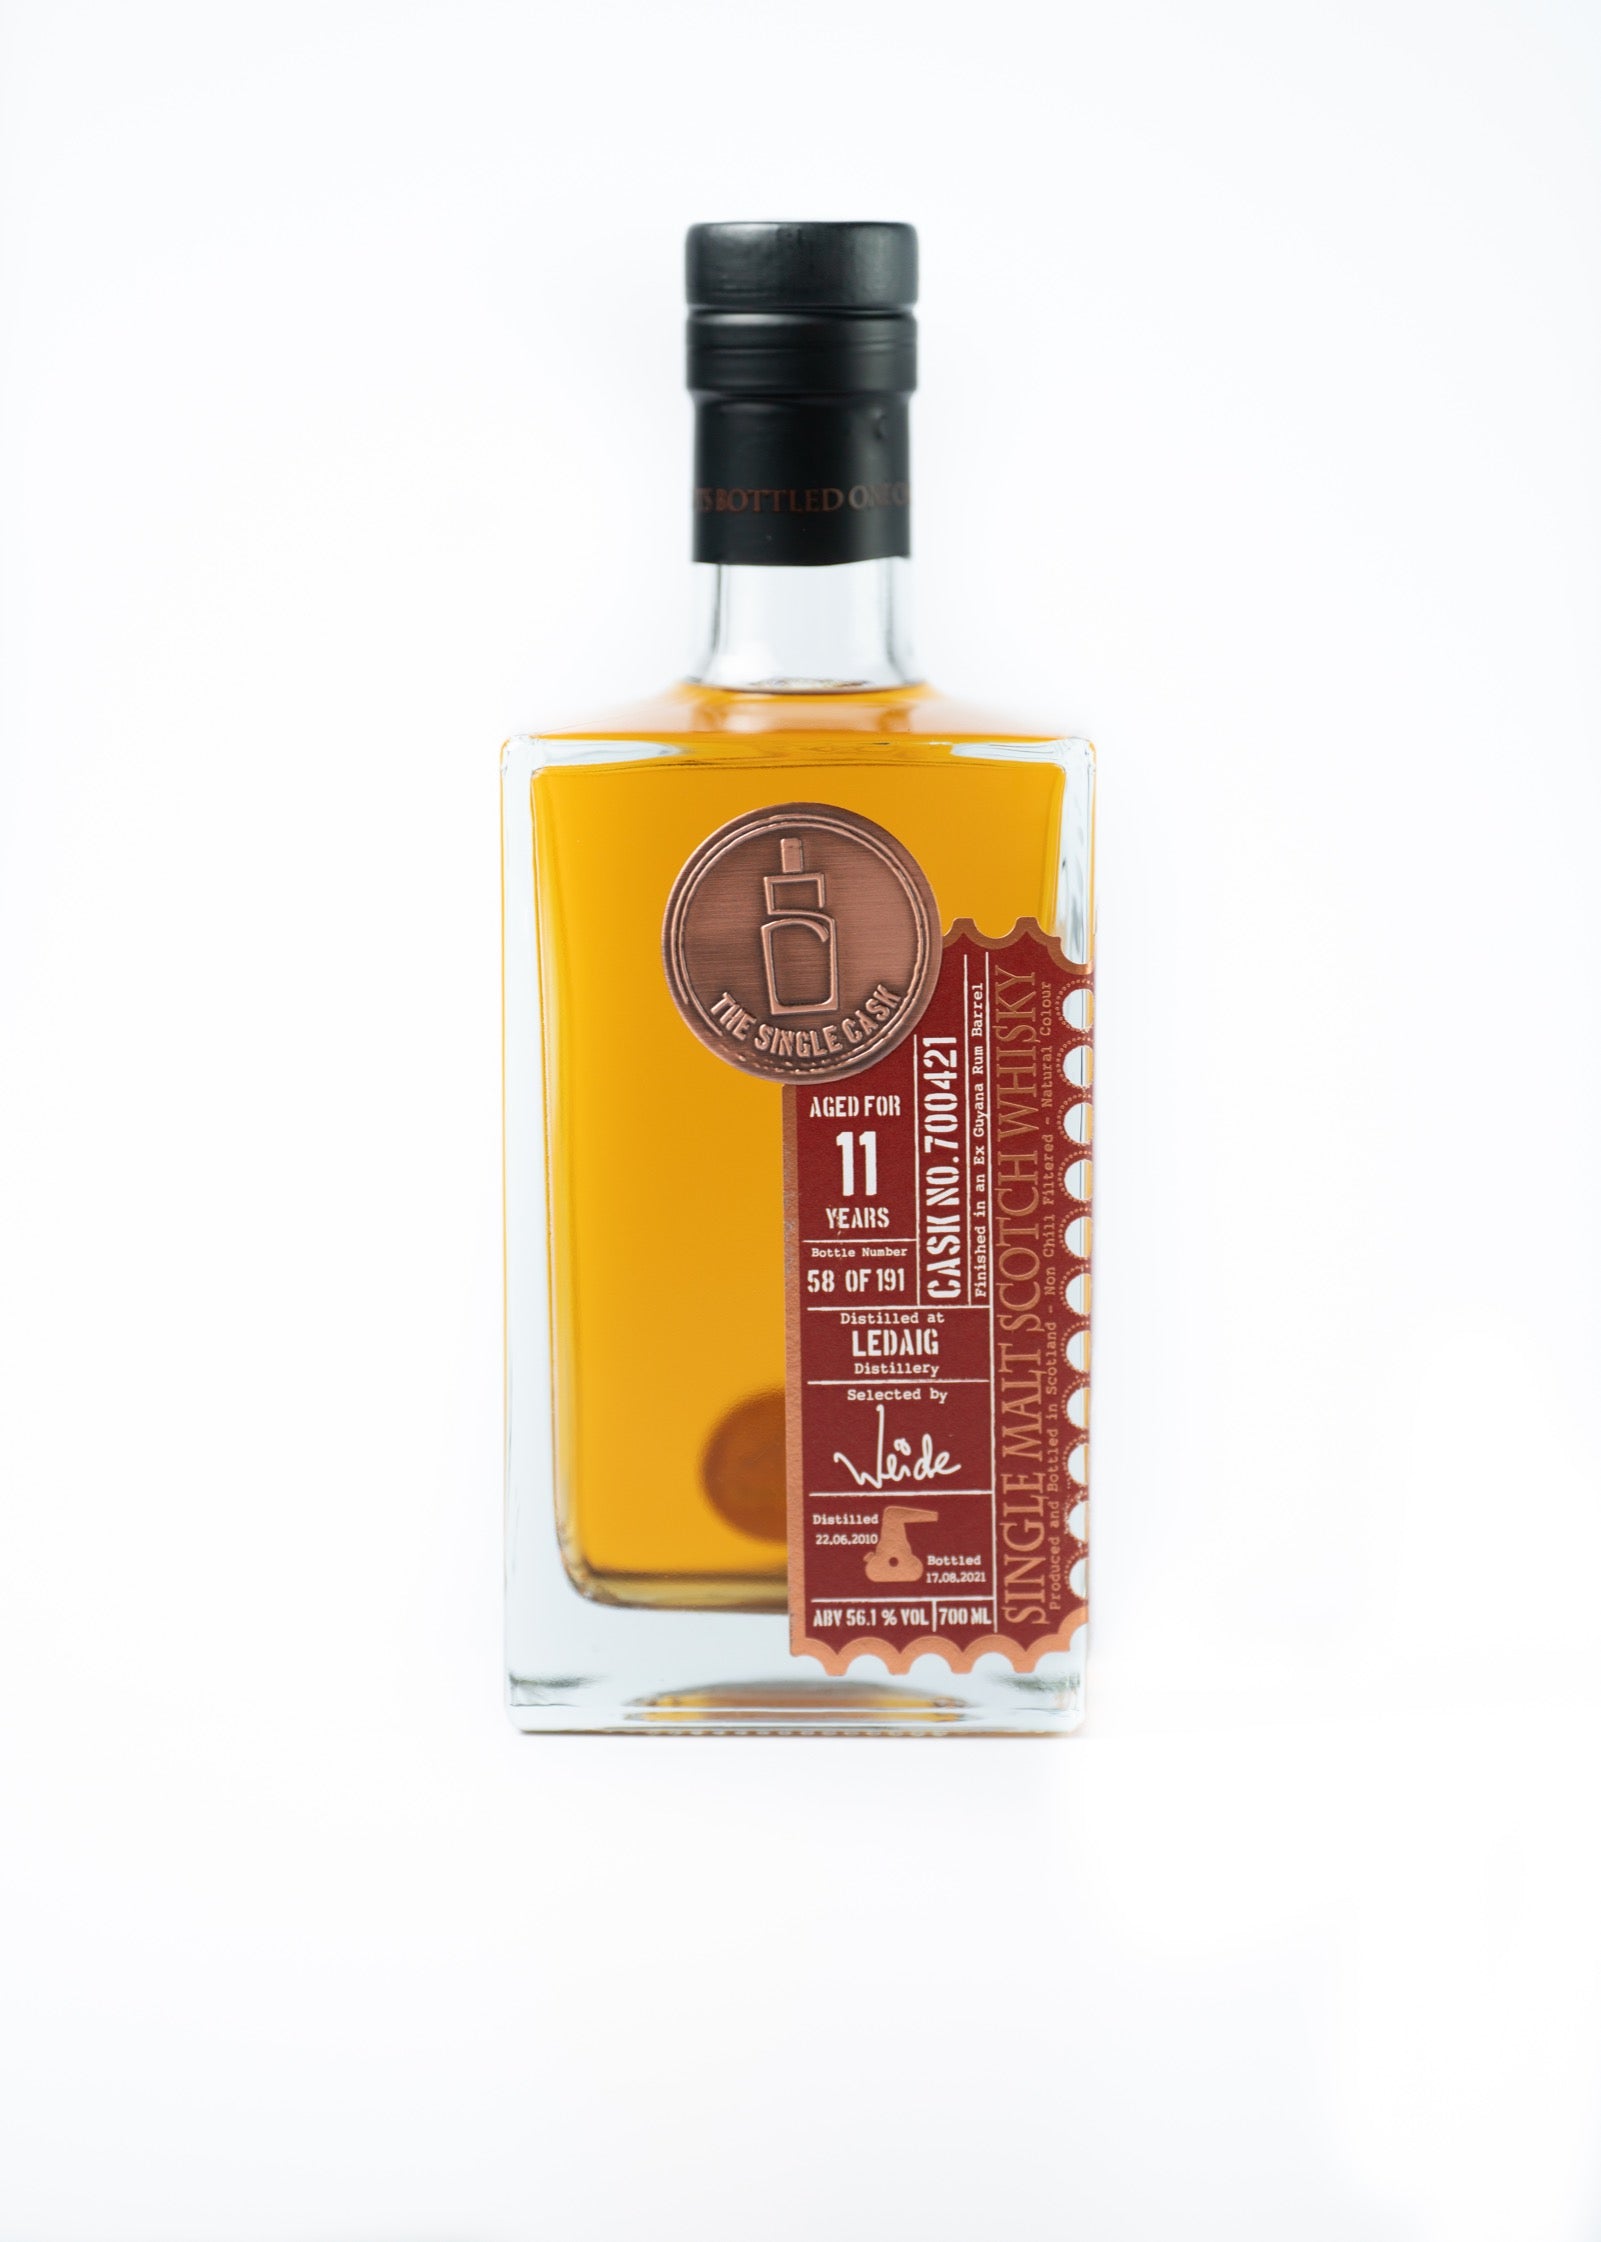 The Single Cask Christmas bottle 11 years old Ledaig single malt scotch whisky finished in an ex Guyana rum barrel. 